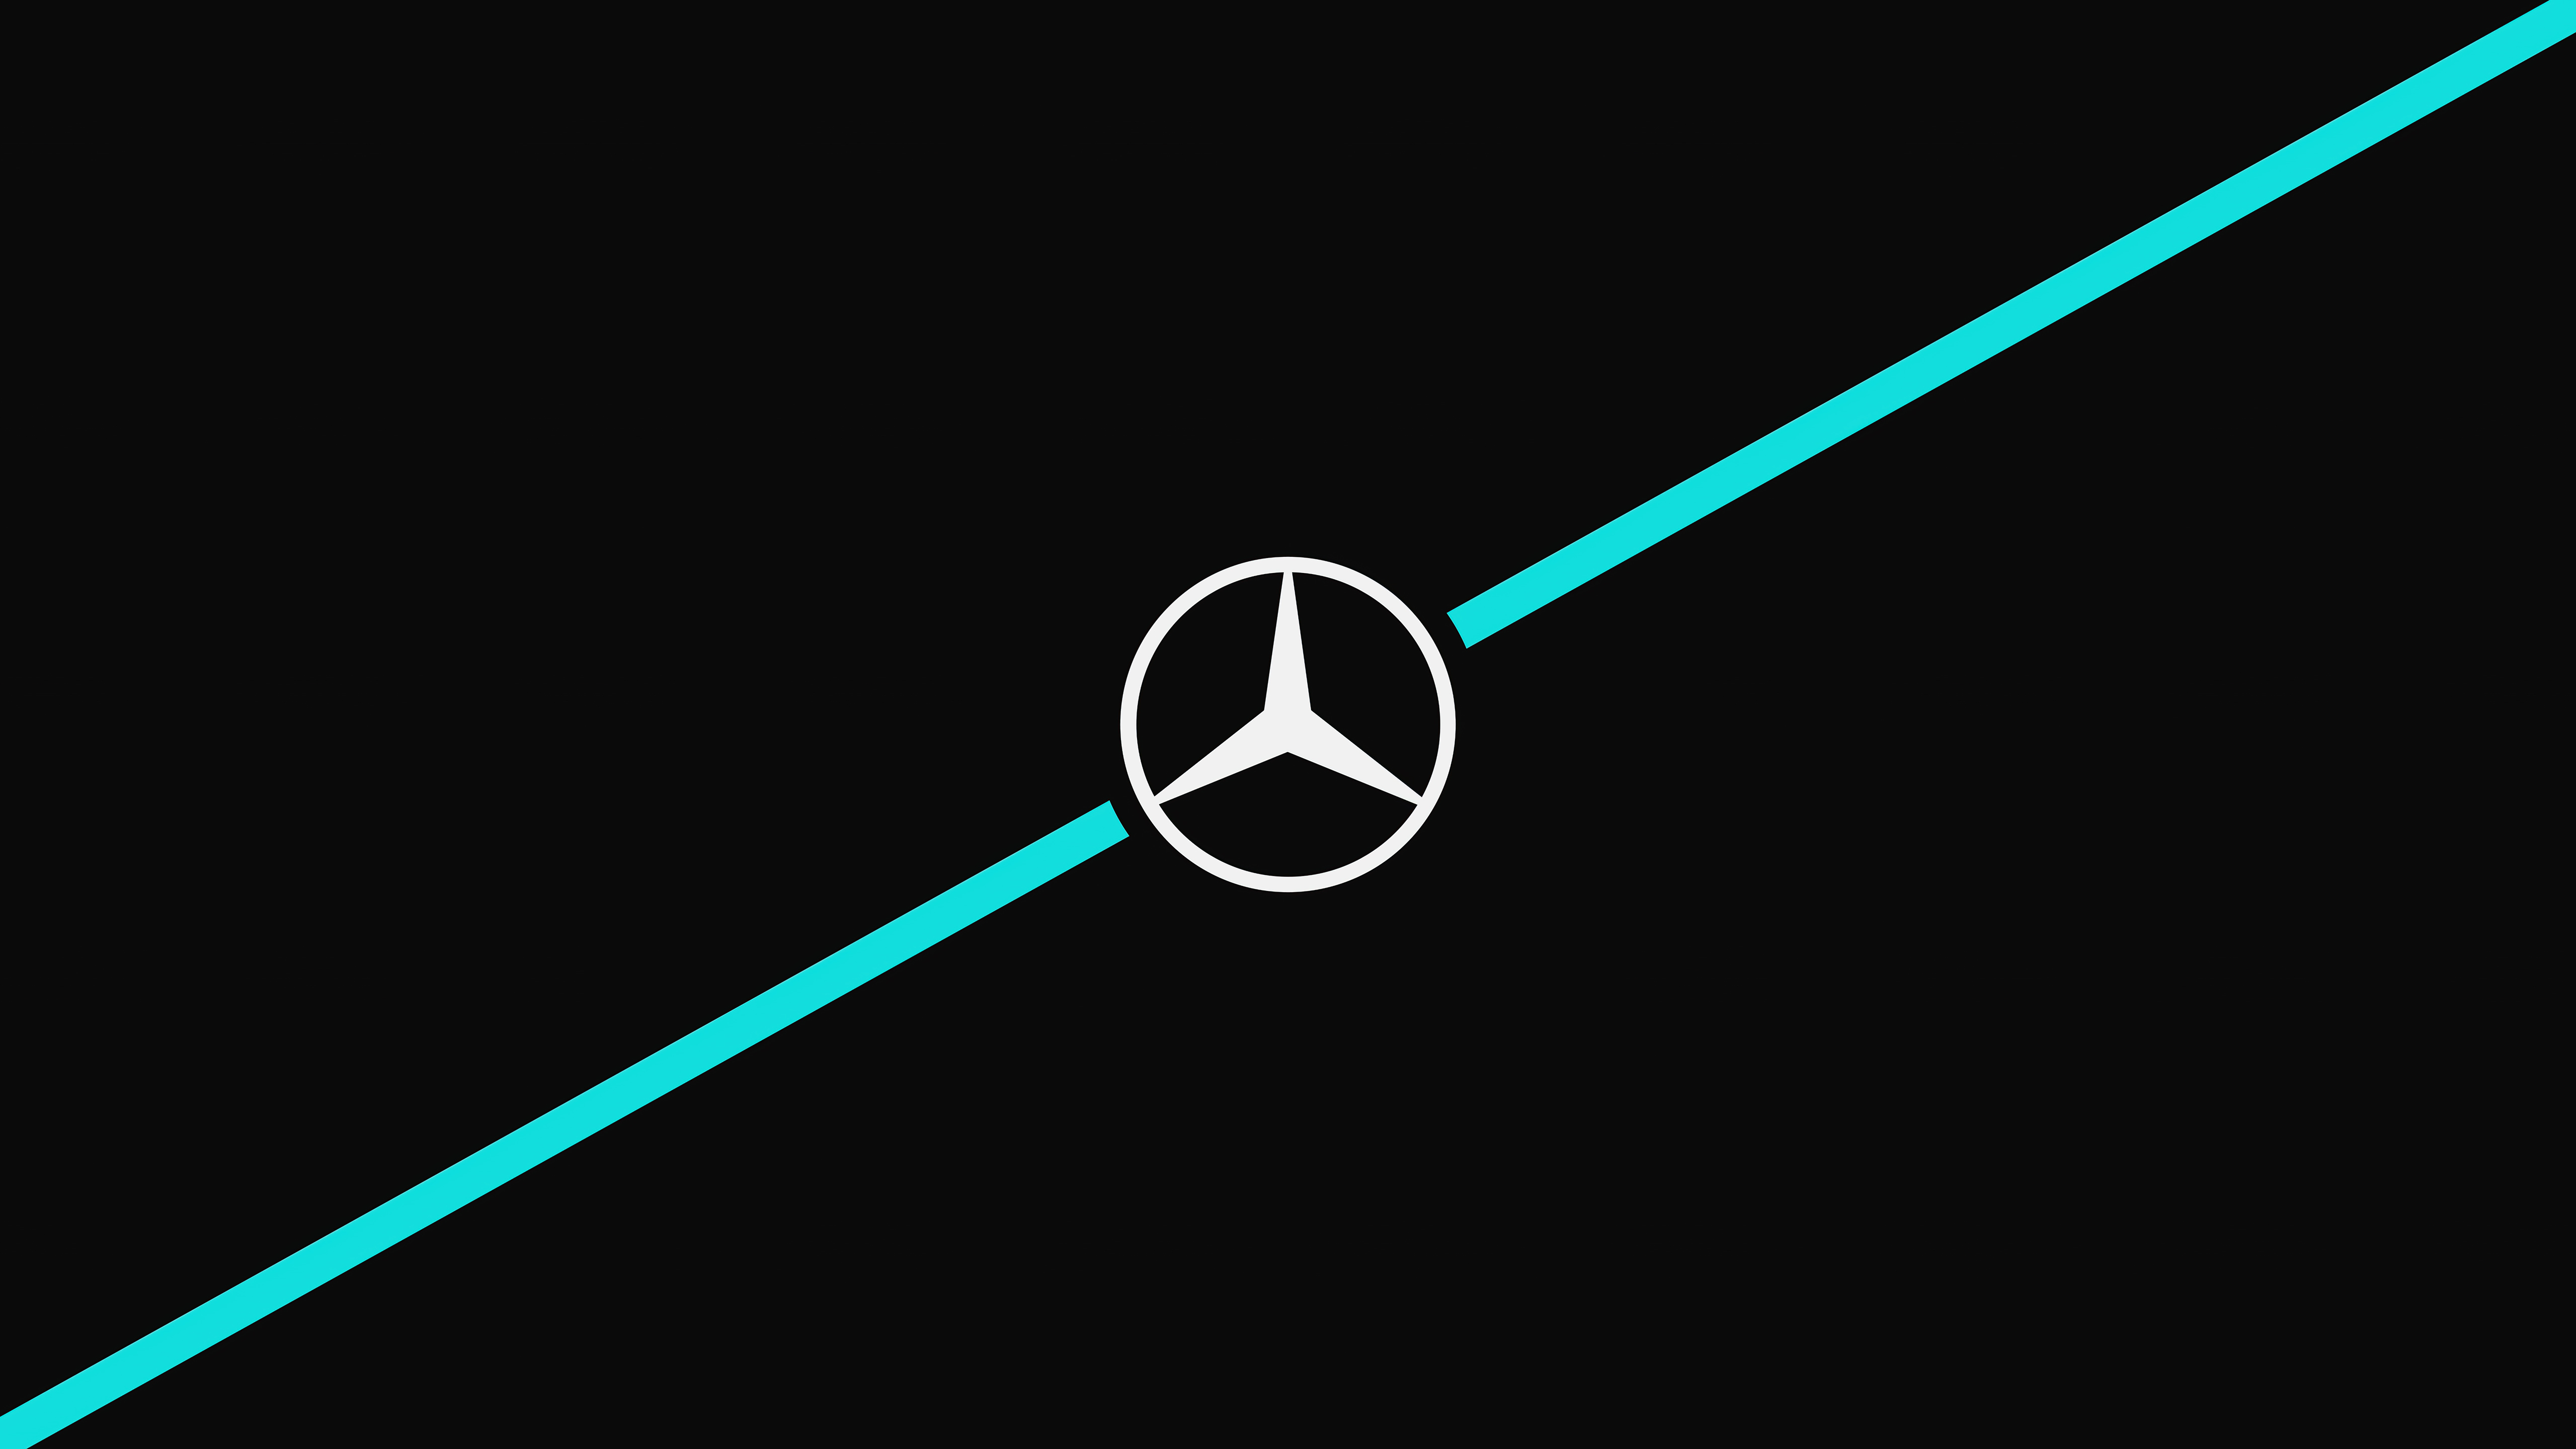 Бесплатное фото Логотип мерседес на черном фоне